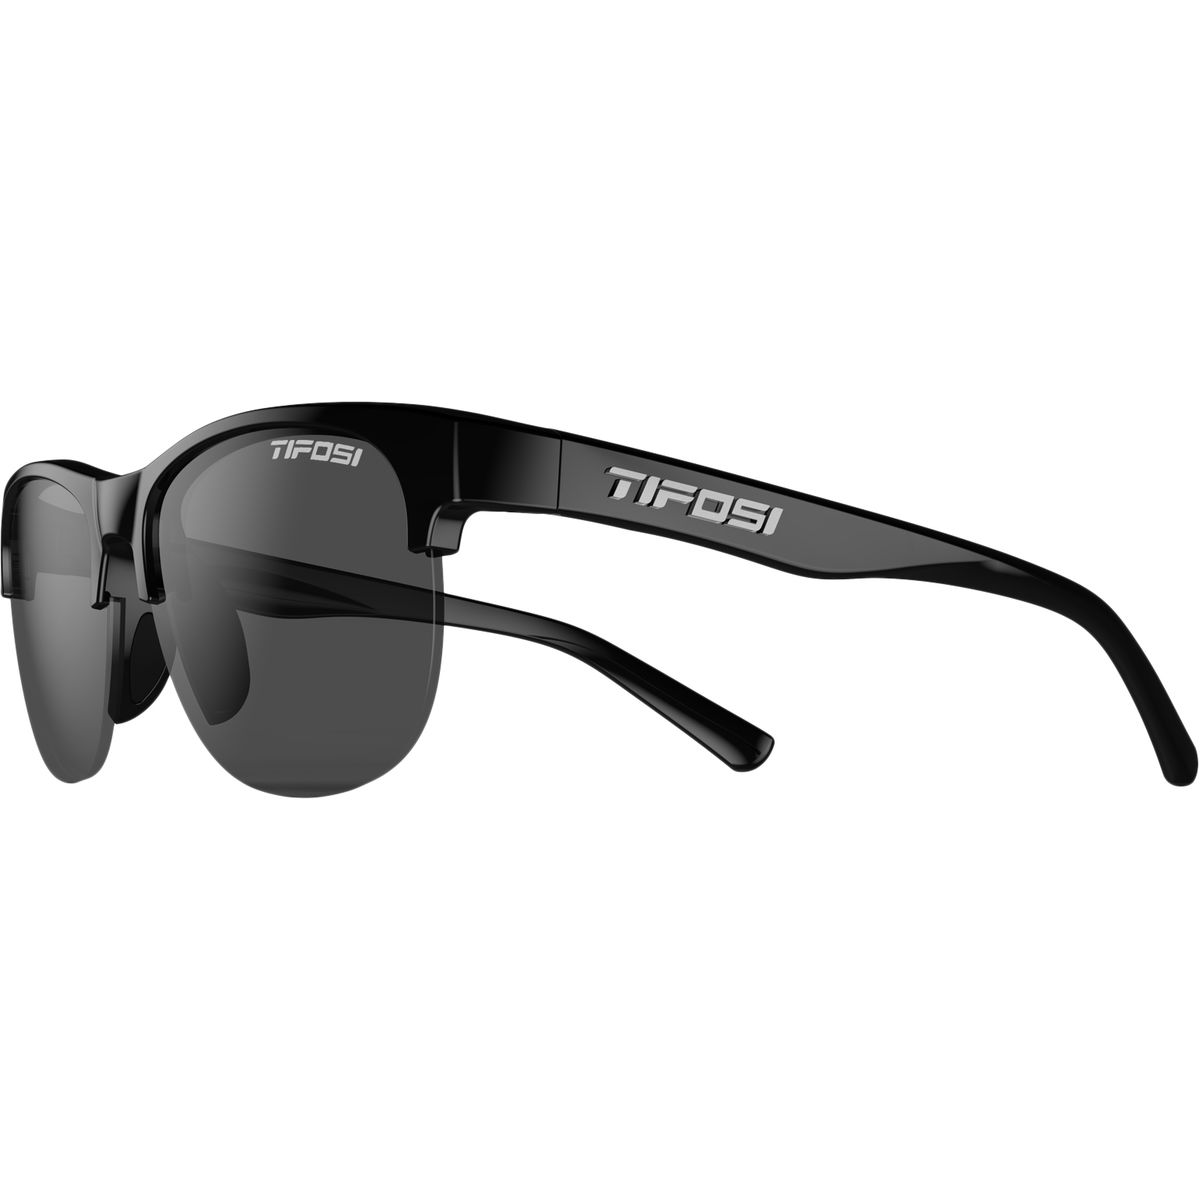 Tifosi Optics Swank SL Sunglasses - Women's